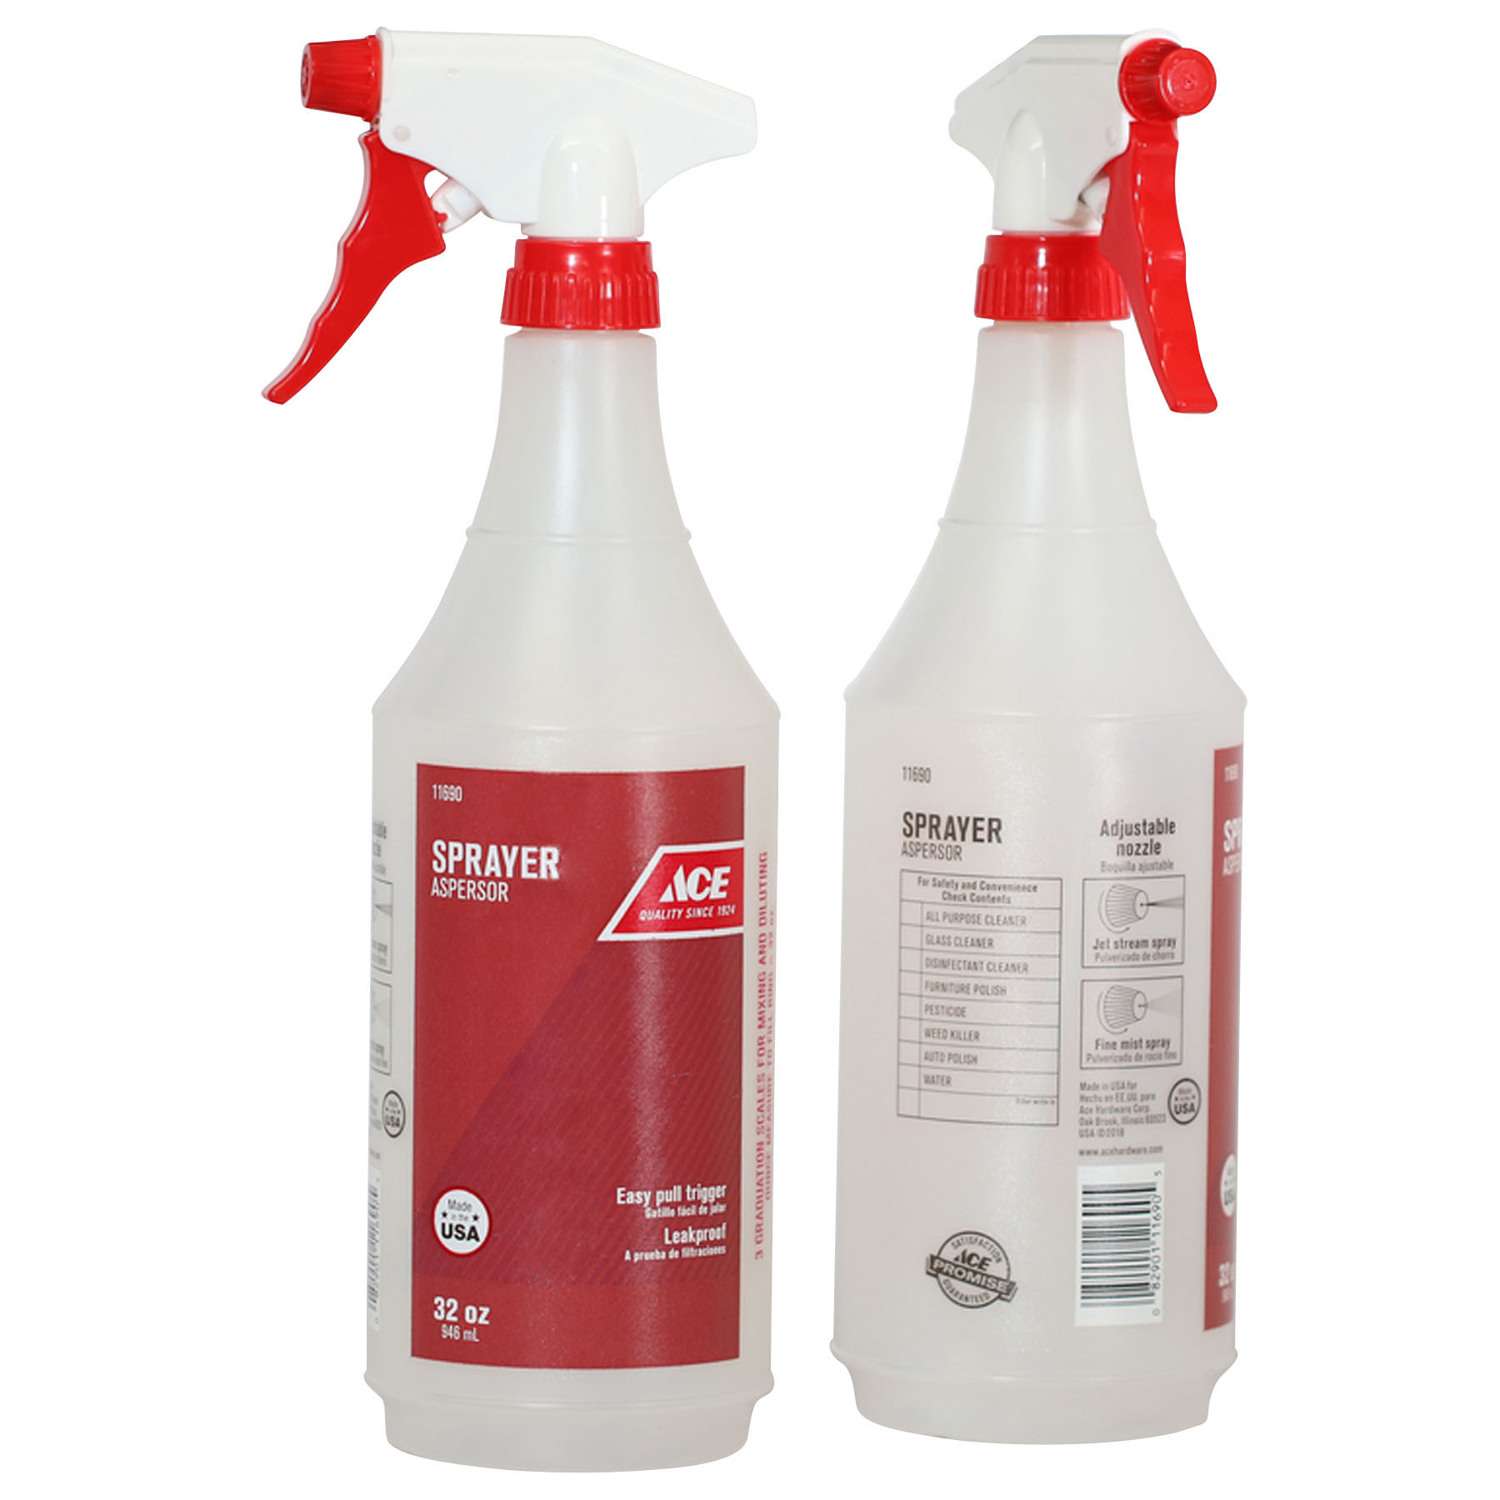 Plastic Spray Bottle 4 Pack 24 Oz (Upgraded Sprayer) All-Purpose